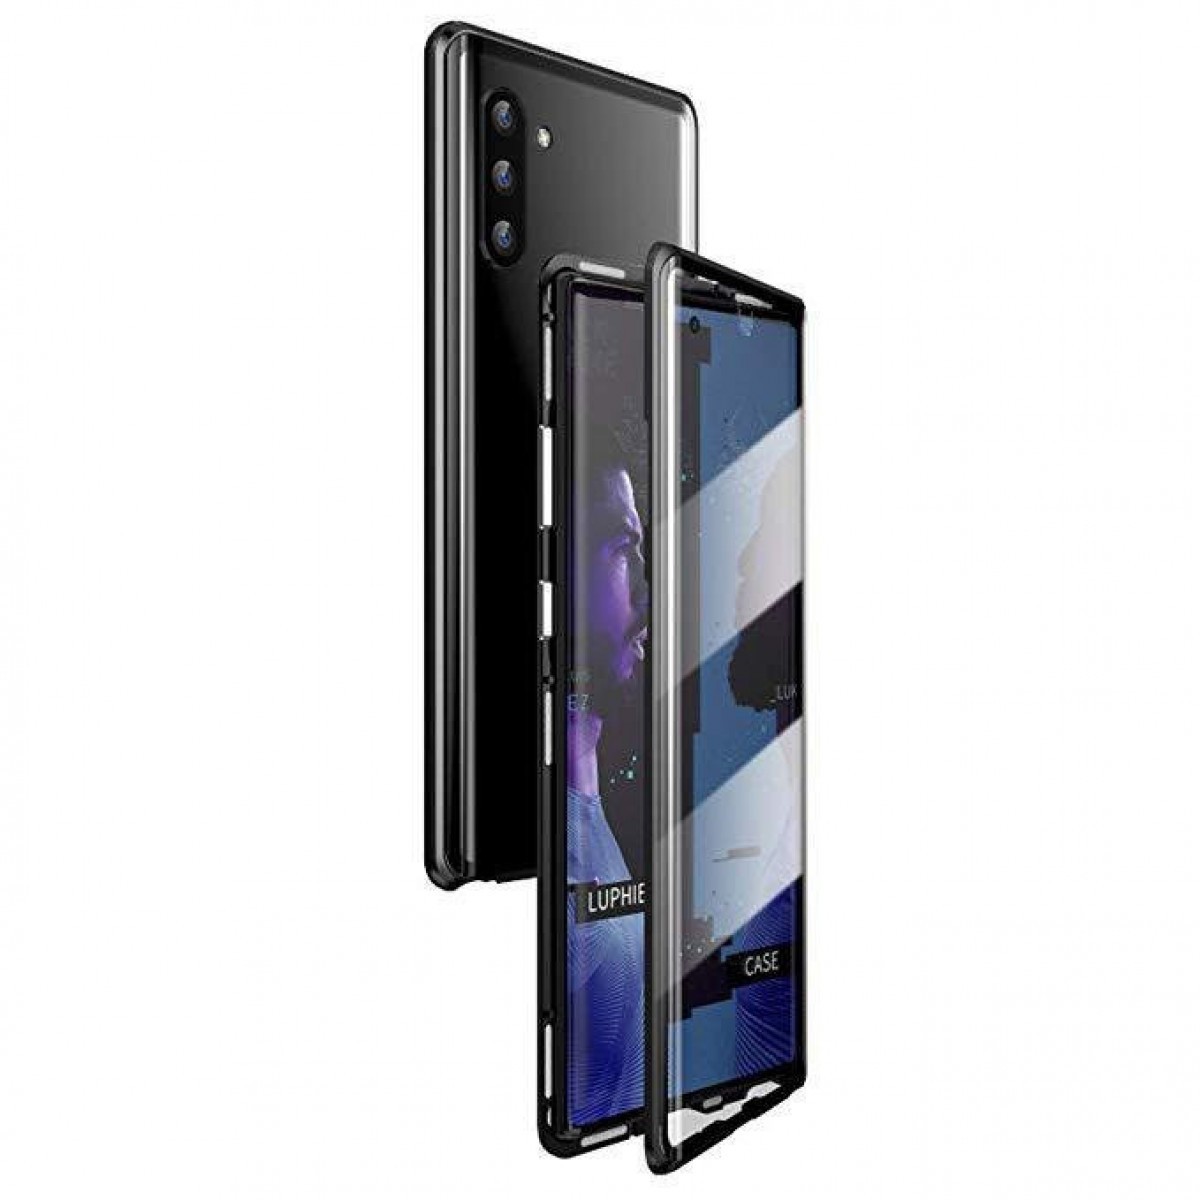 Двусторонний магнитный чехол Magnetic Angular Frame Tempered Glass на Samsung Galaxy Note 10 - черный